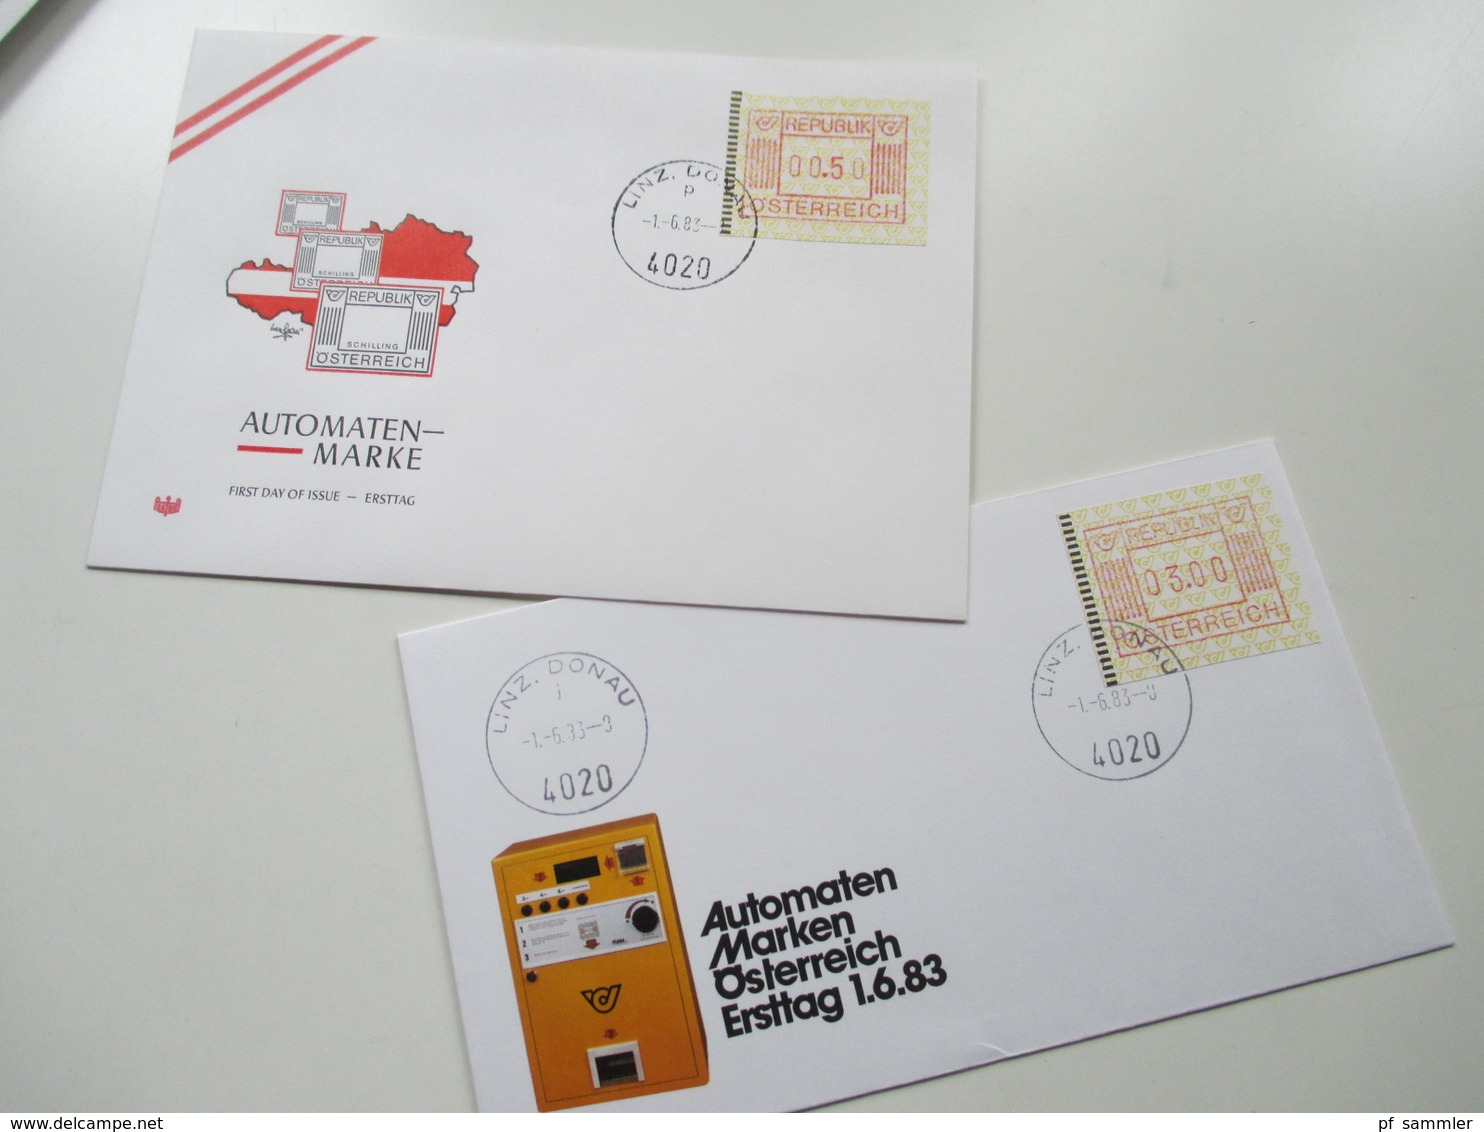 Österreich 1983 MK / FDC / Sonderstempel ATM Nr. 1. 42x FDC / verschiedene Stempel + 10x Nr. 1728 FDC verschiedene Stemp